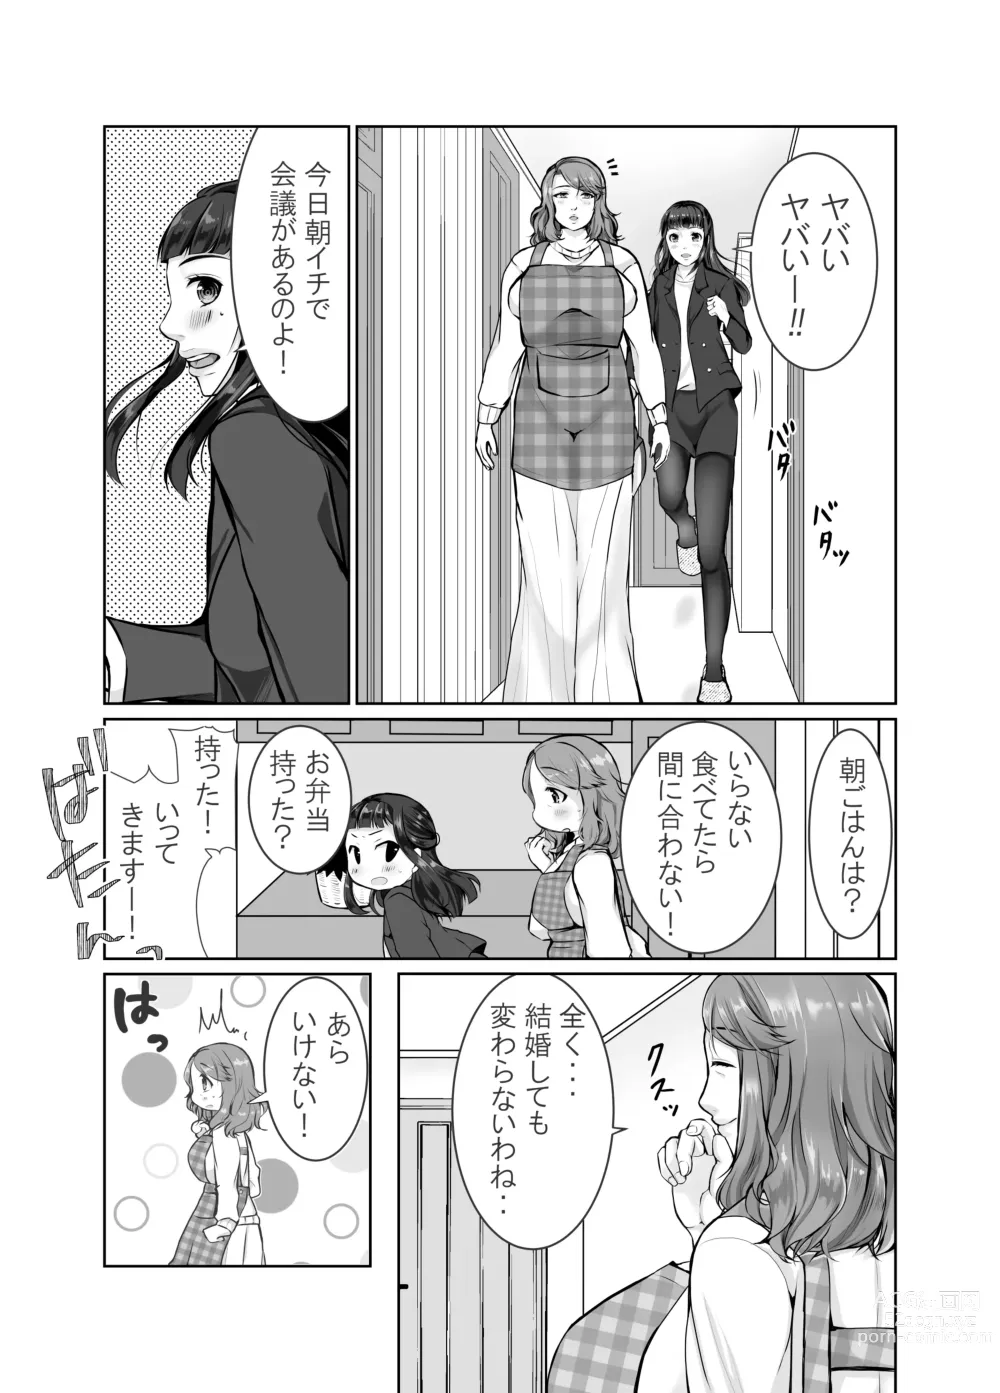 Page 3 of doujinshi Musumemuko ni Ochita Haha